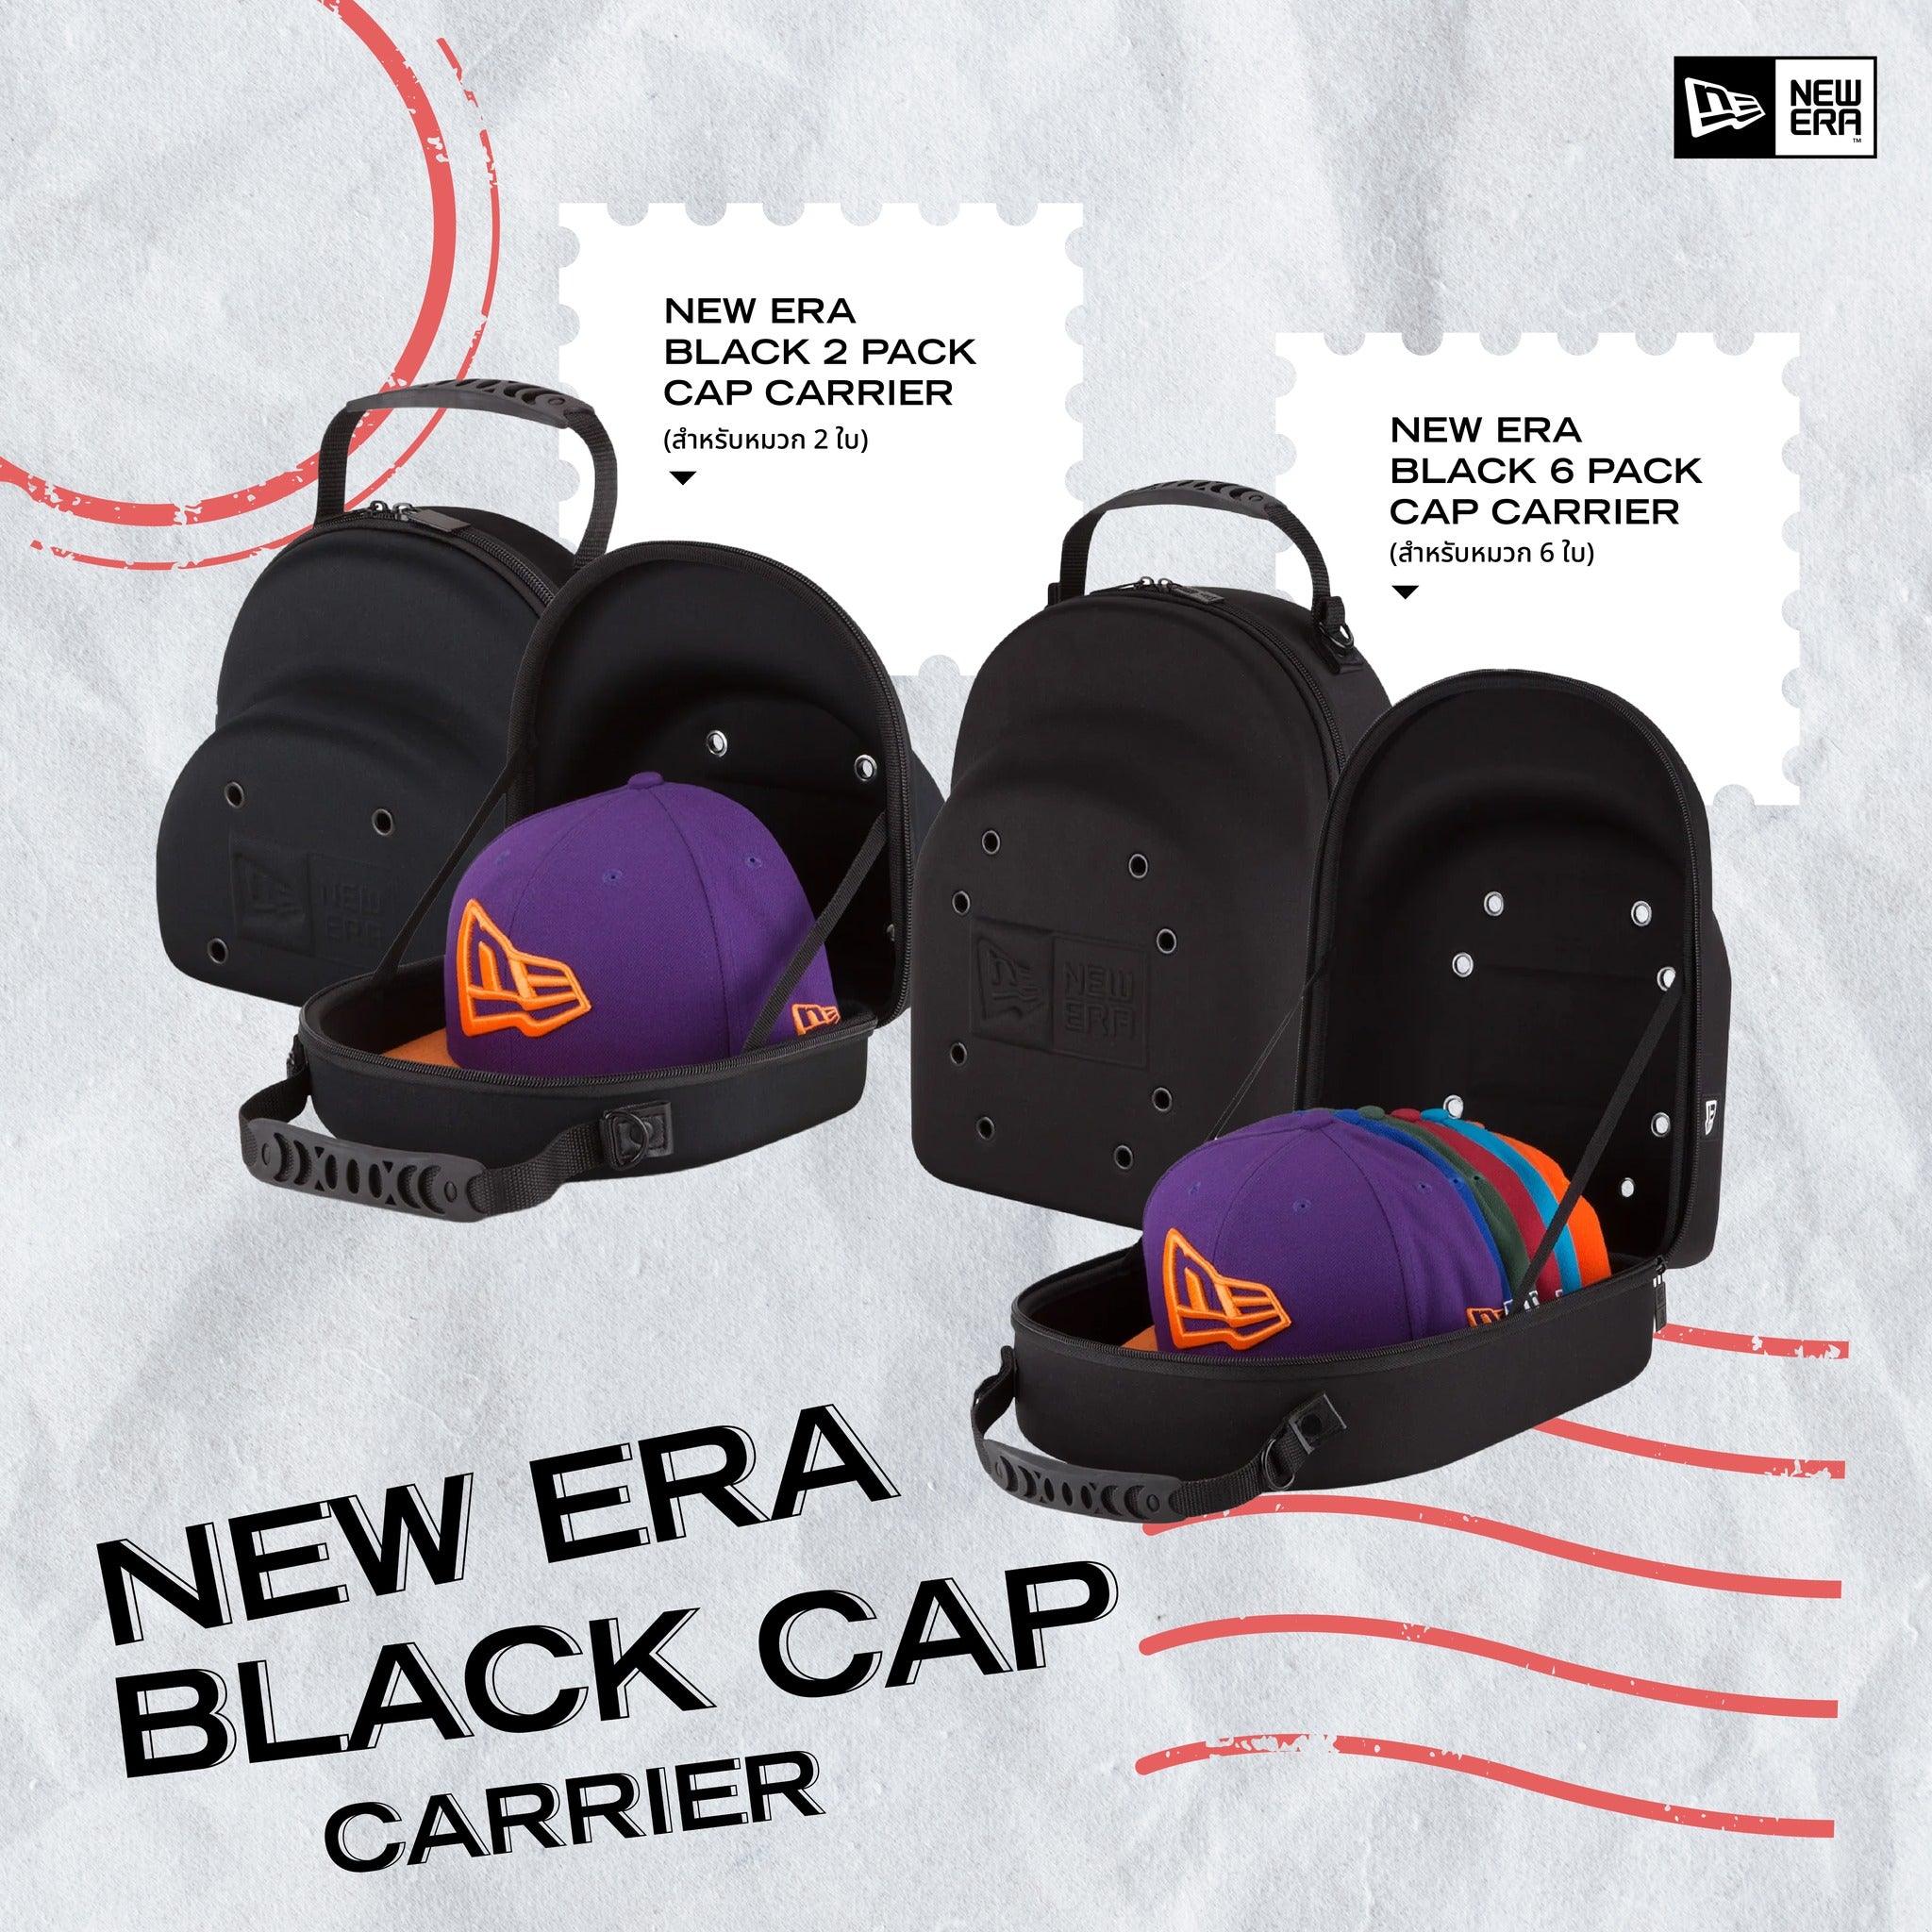 NEW ERA BLACK CAP CARRIER